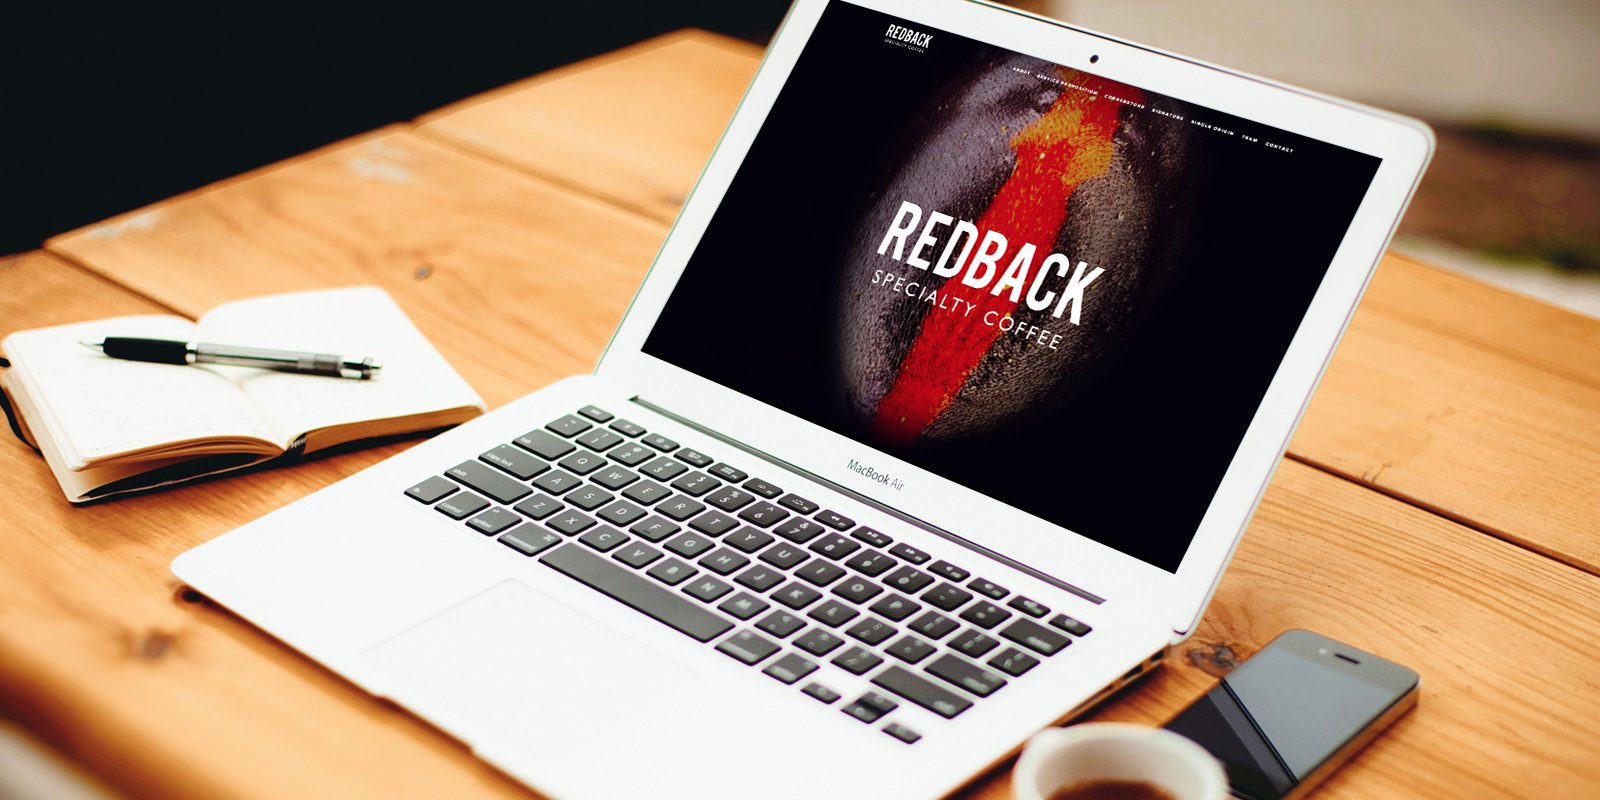 Redback Coffee website on laptop screen